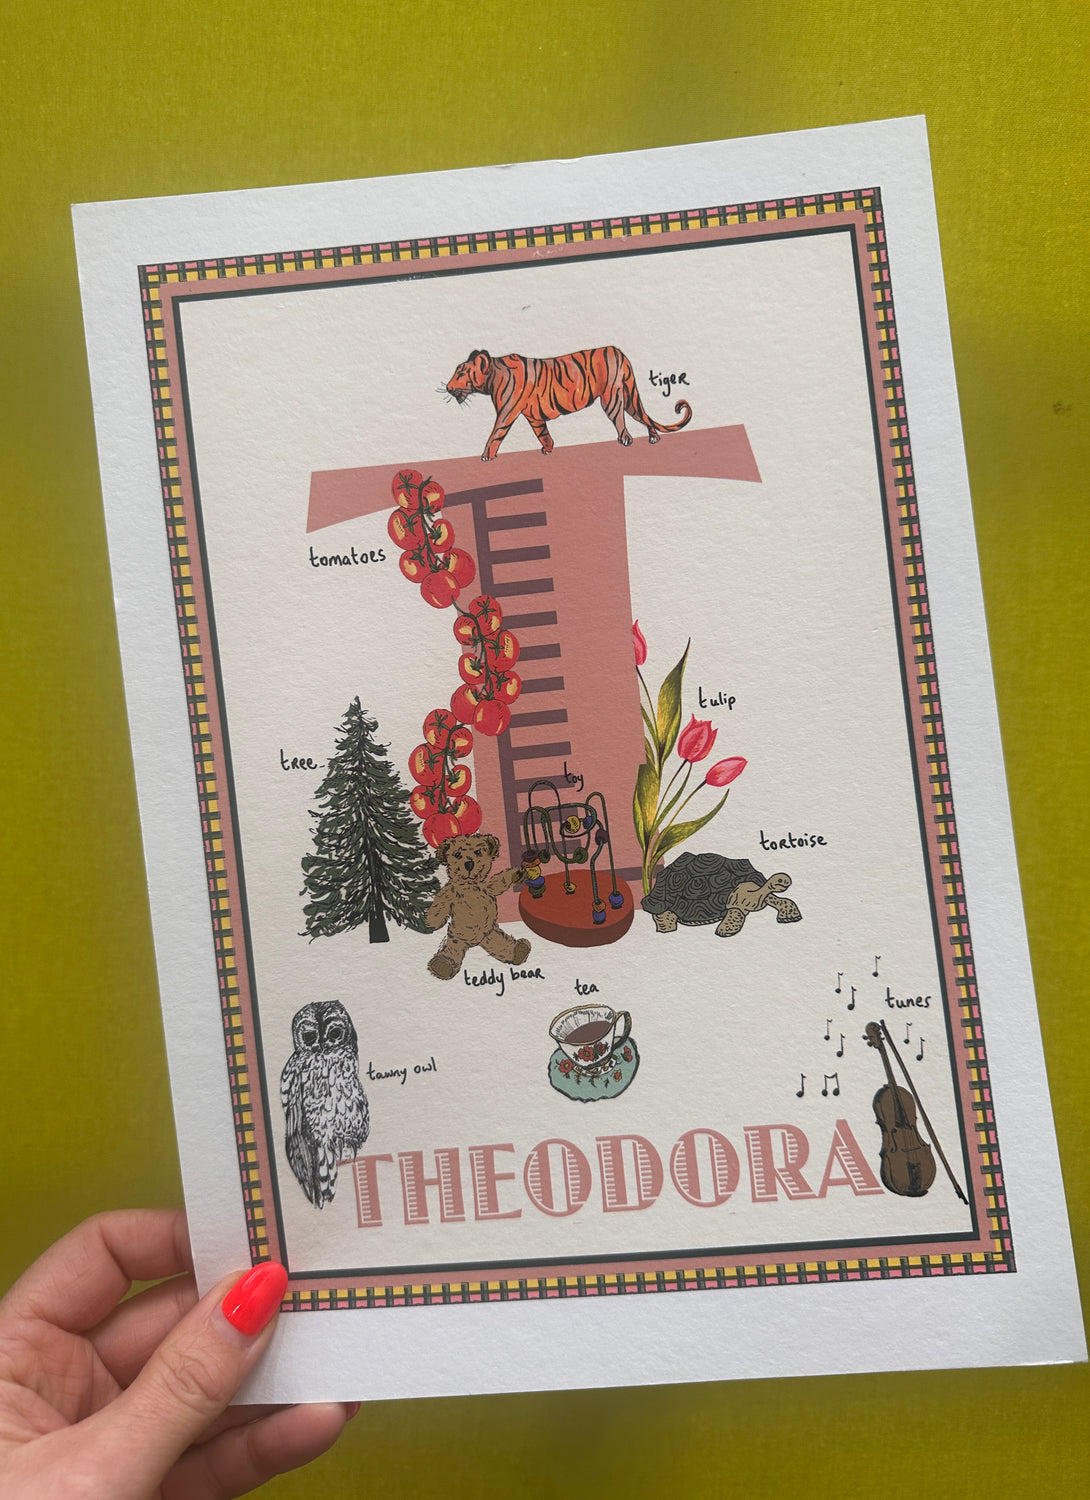 Theodora Letter Print